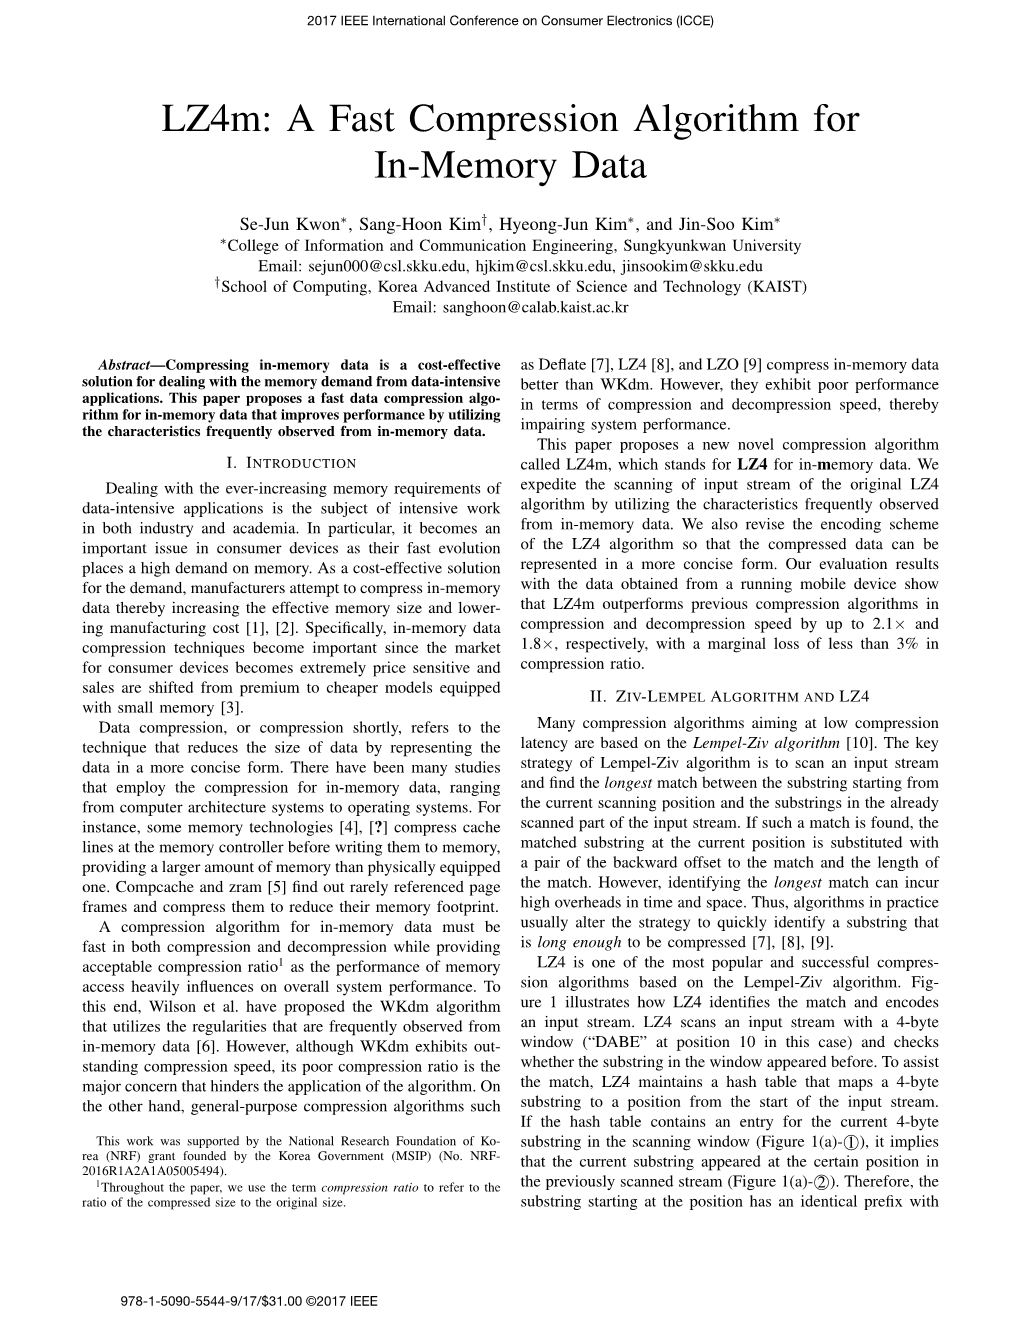 Lz4m: a Fast Compression Algorithm for In-Memory Data